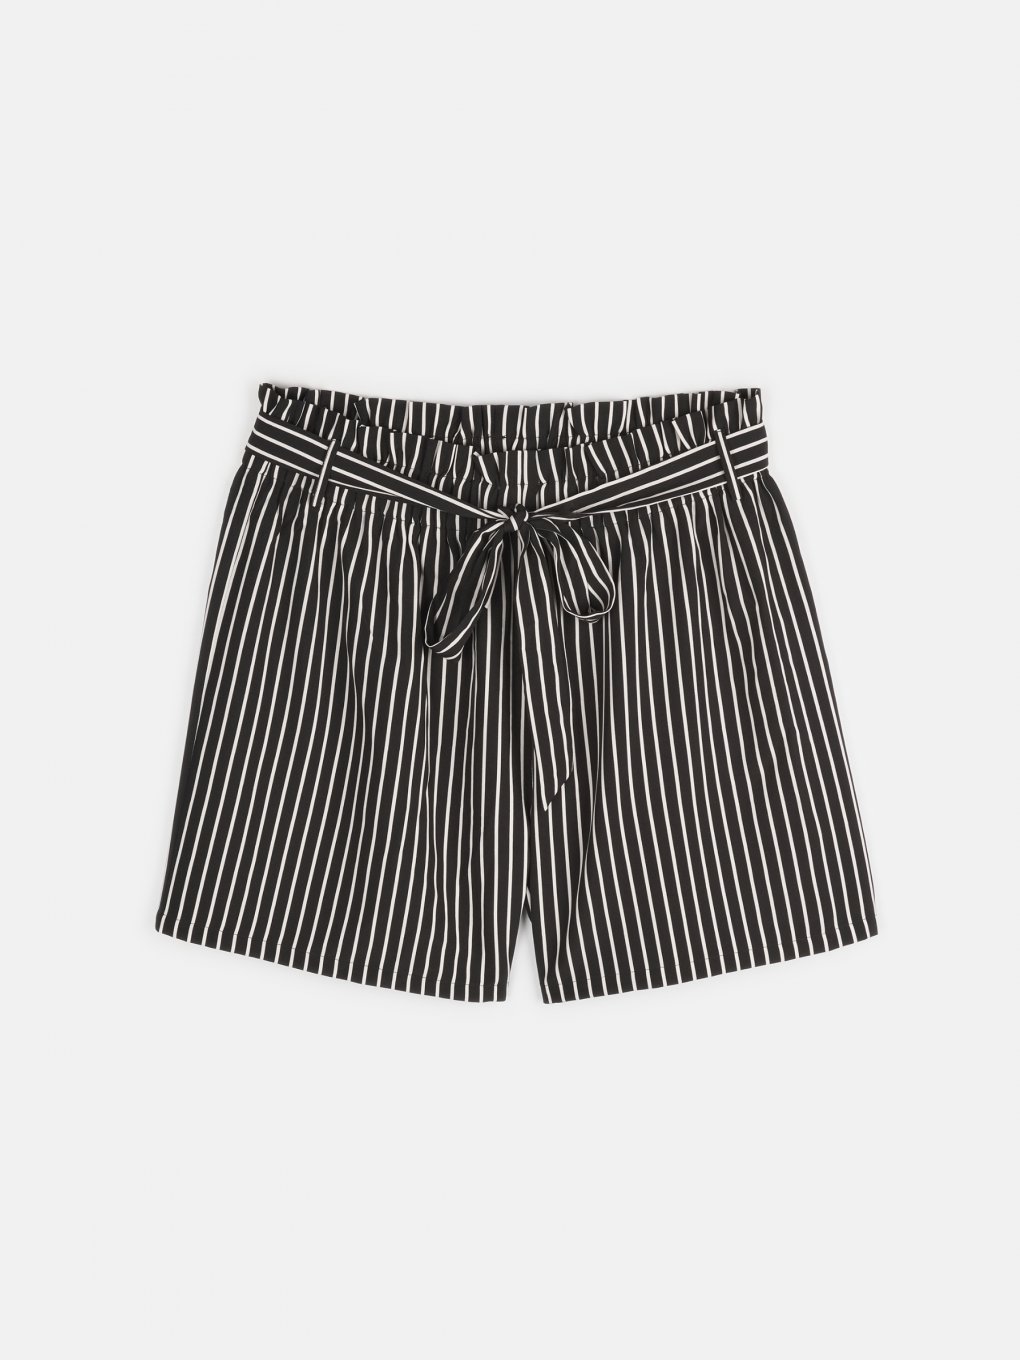 Plus size striped shorts